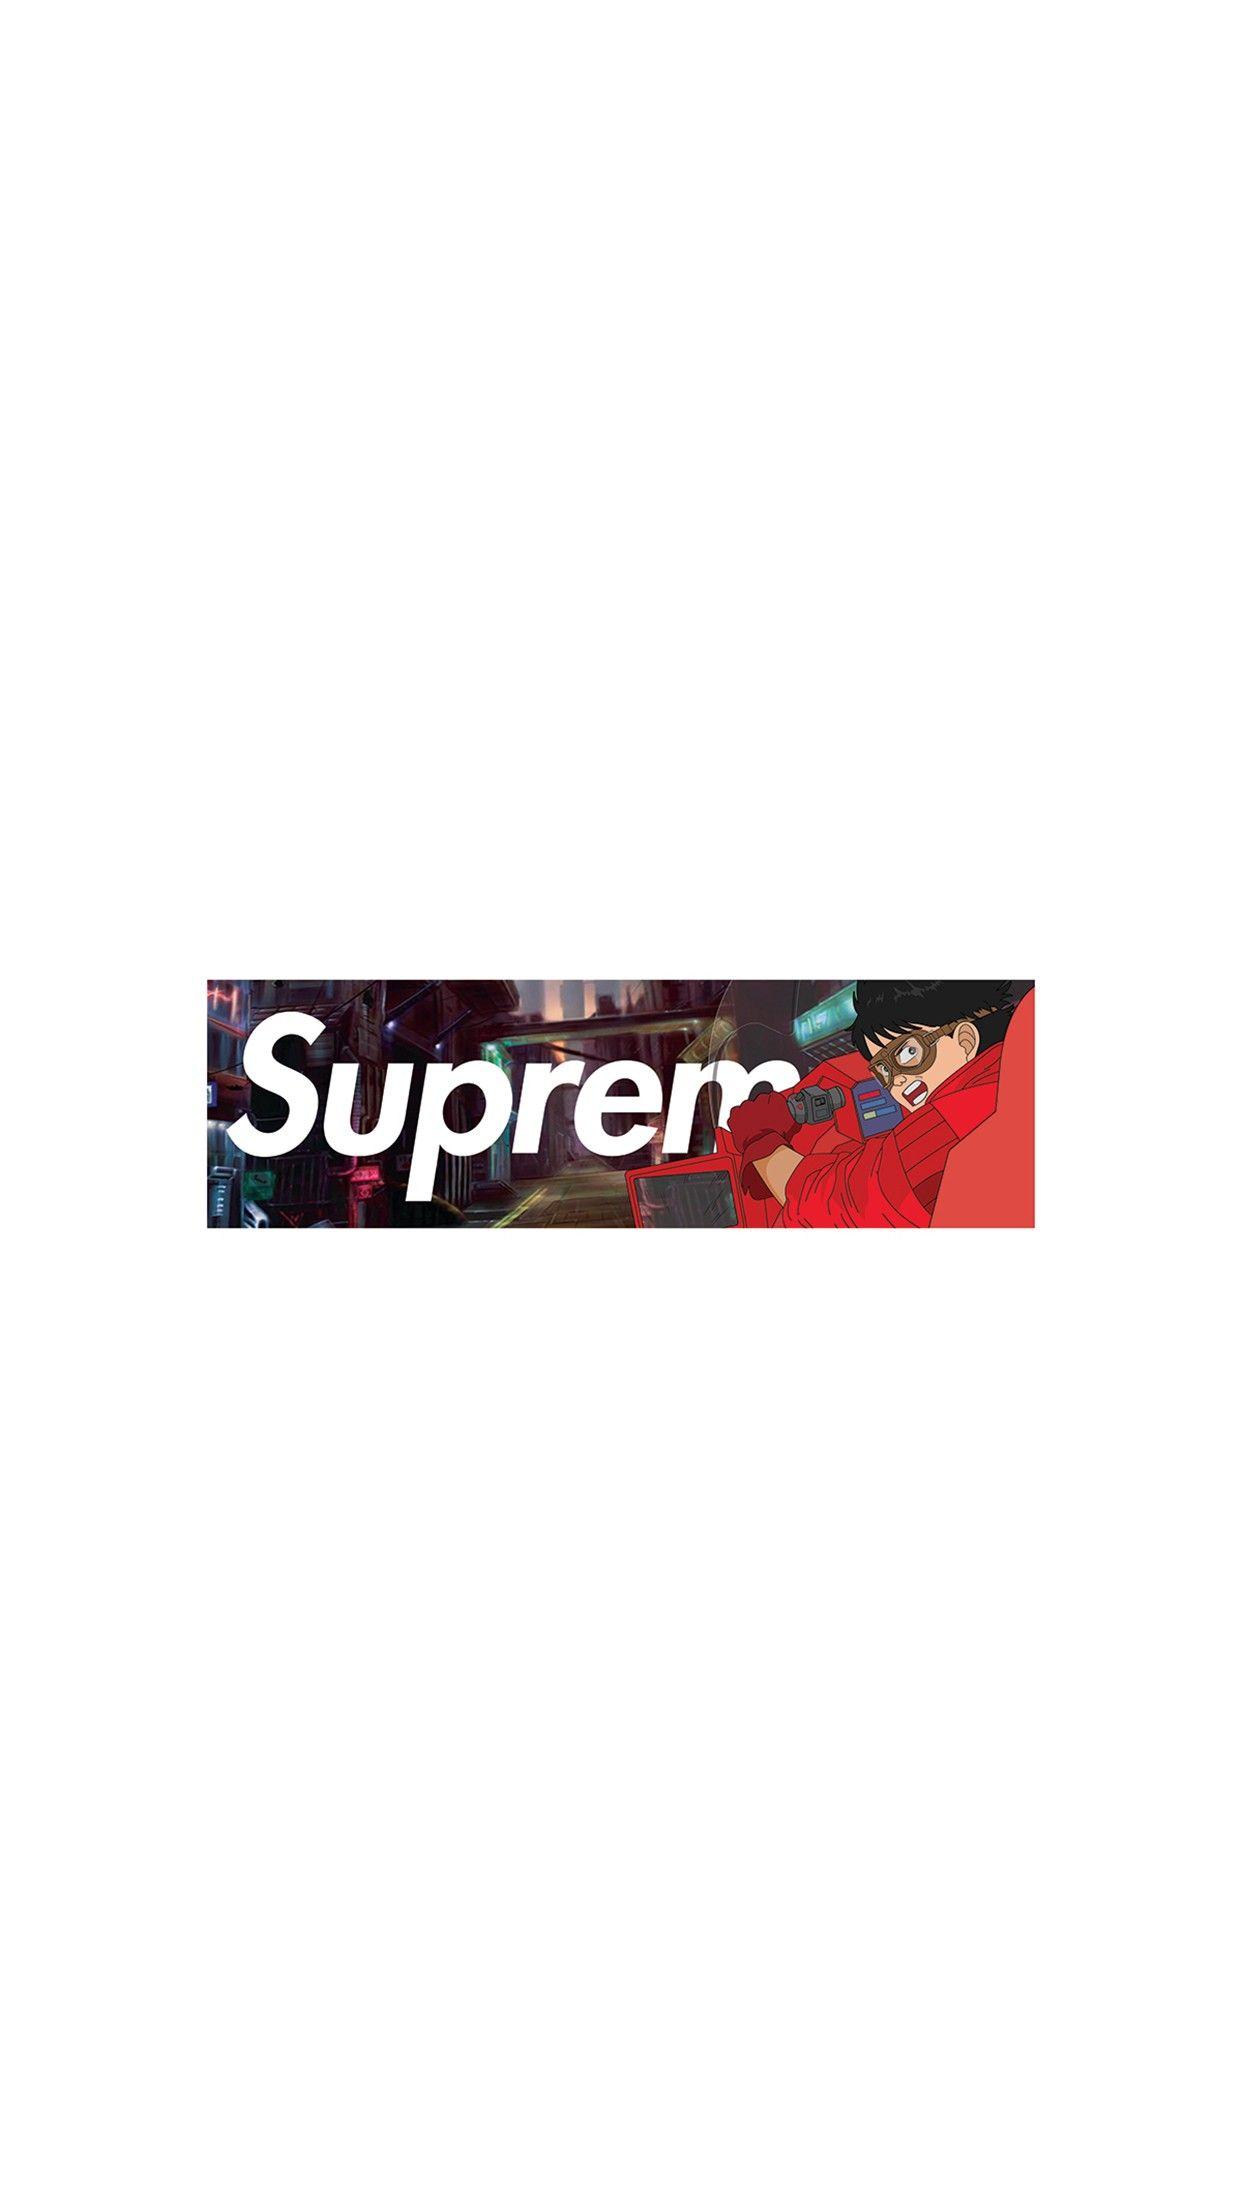 Supreme Mac Wallpapers Top Free Supreme Mac Backgrounds Wallpaperaccess